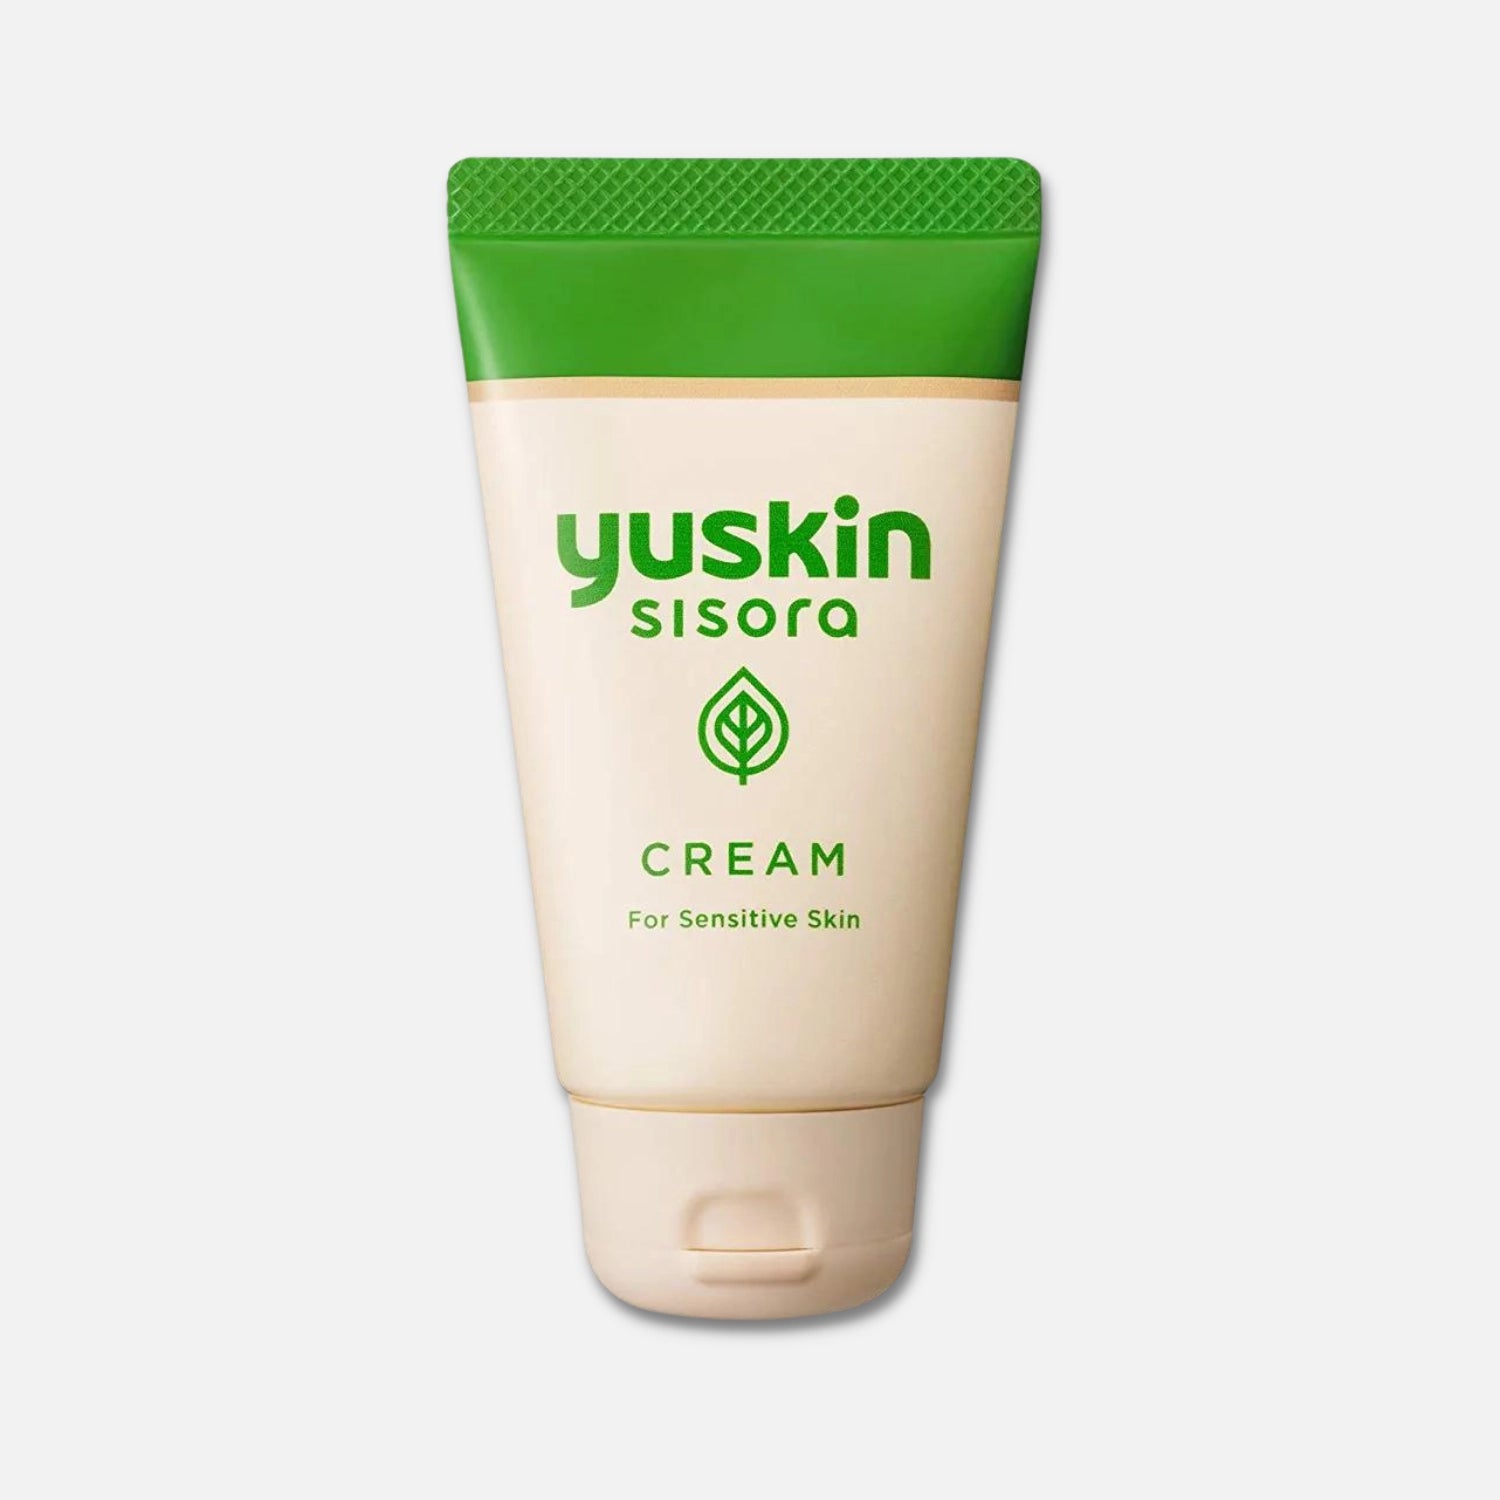 Yuskin Sisora Moisturizing Cream 3 Sizes Available - Buy Me Japan